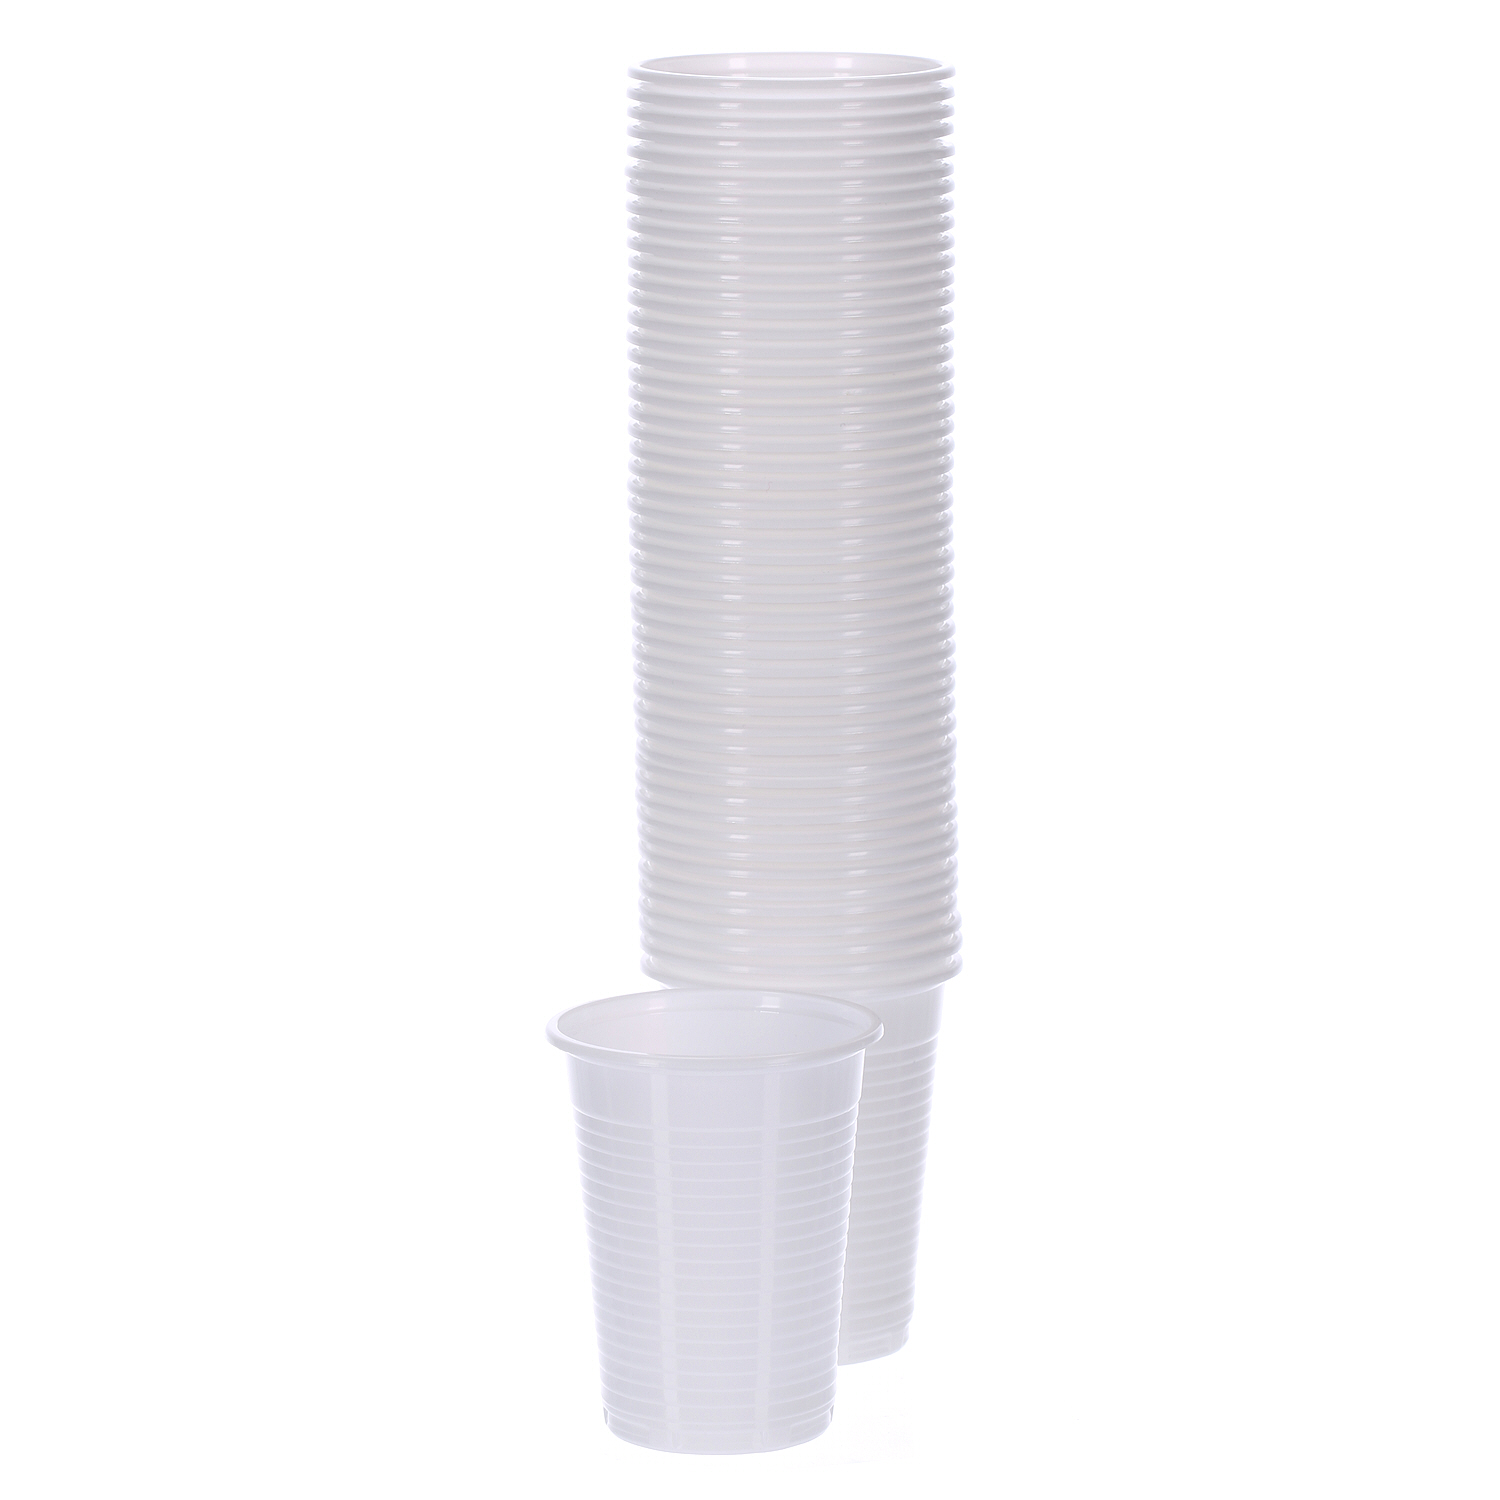 Sharjah Coop White Plastic Cup 6 Oz × 50 Pack